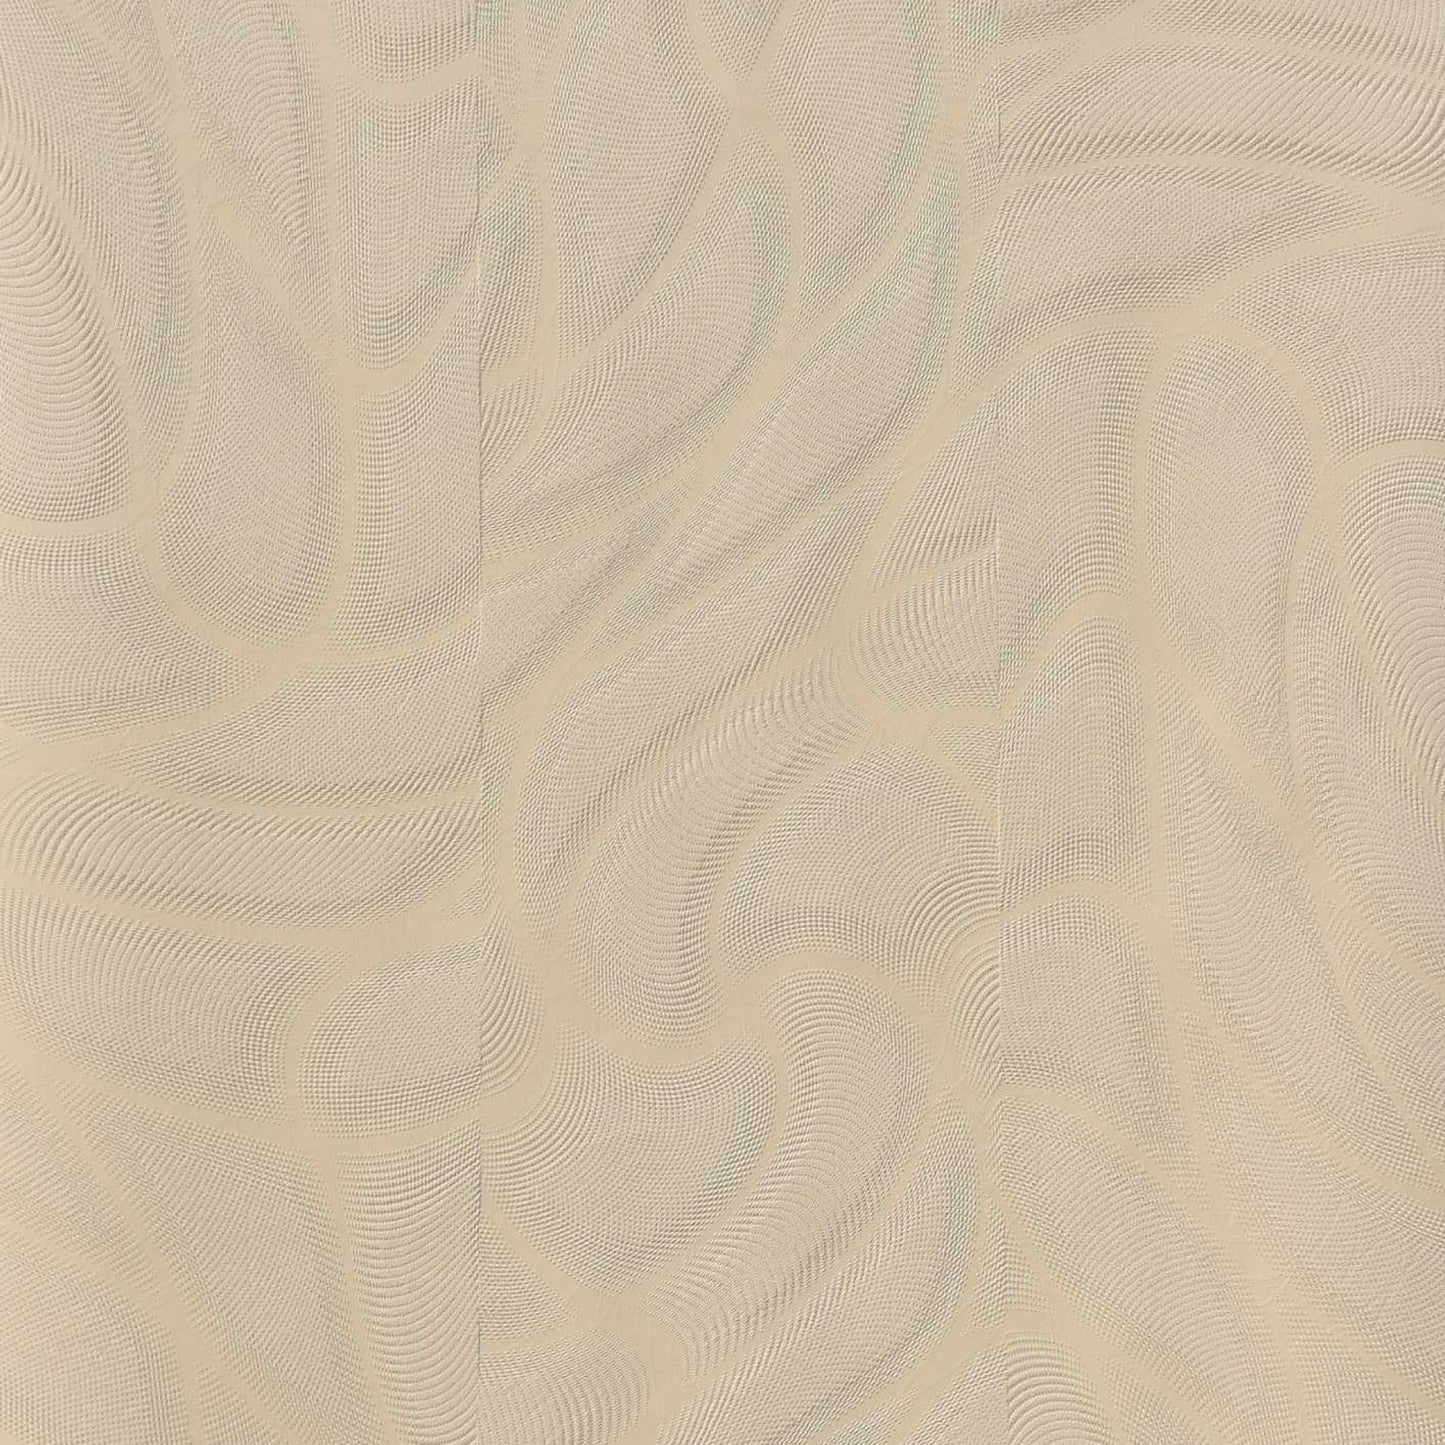 Mesmerizing Swirlscape Embossed Wallpaper